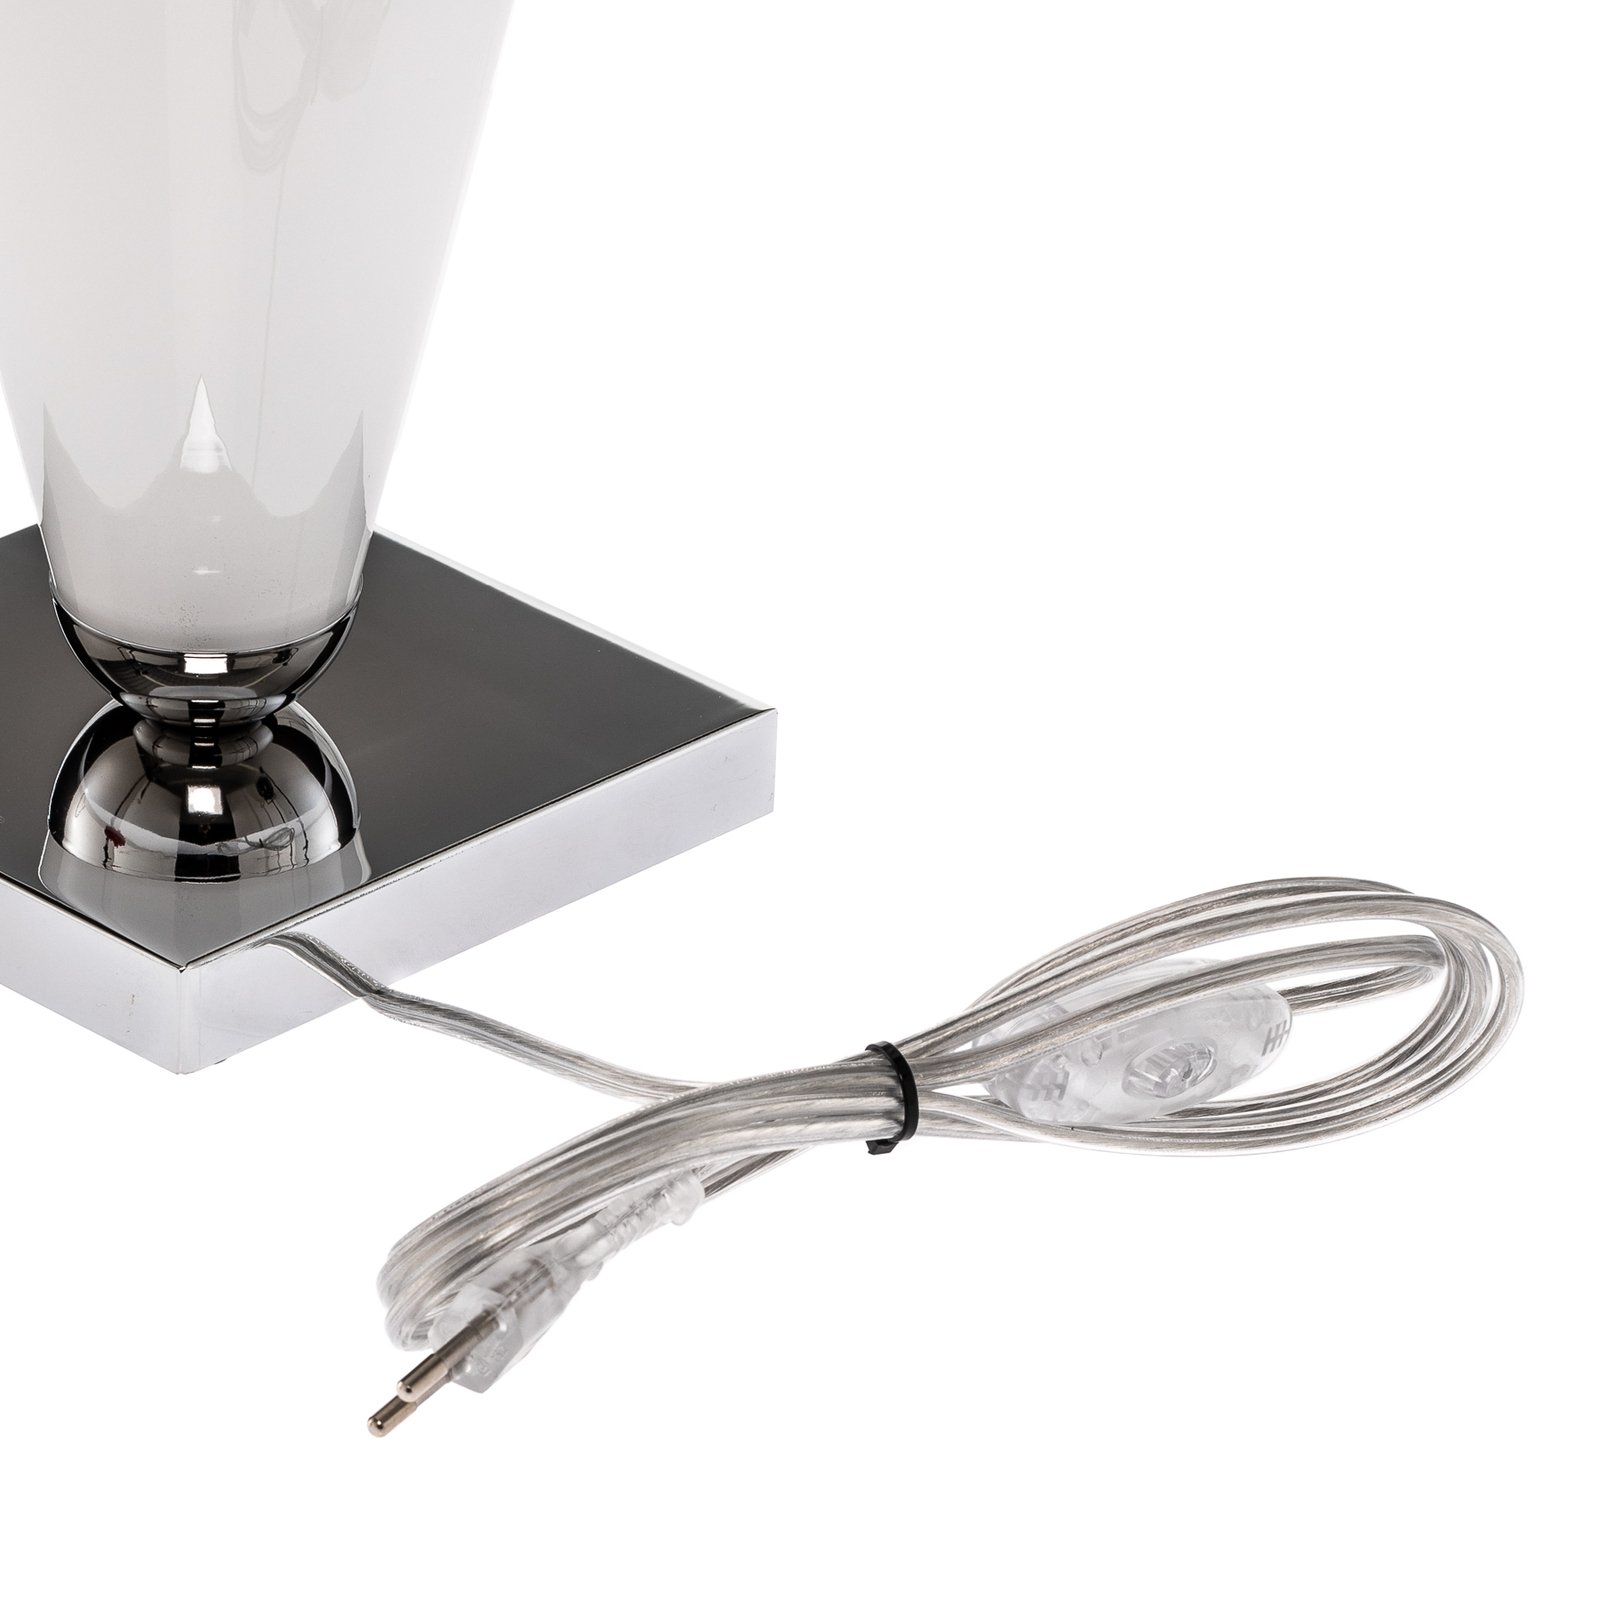 Lámpara de mesa Lund, blanco/opal, altura 70 cm